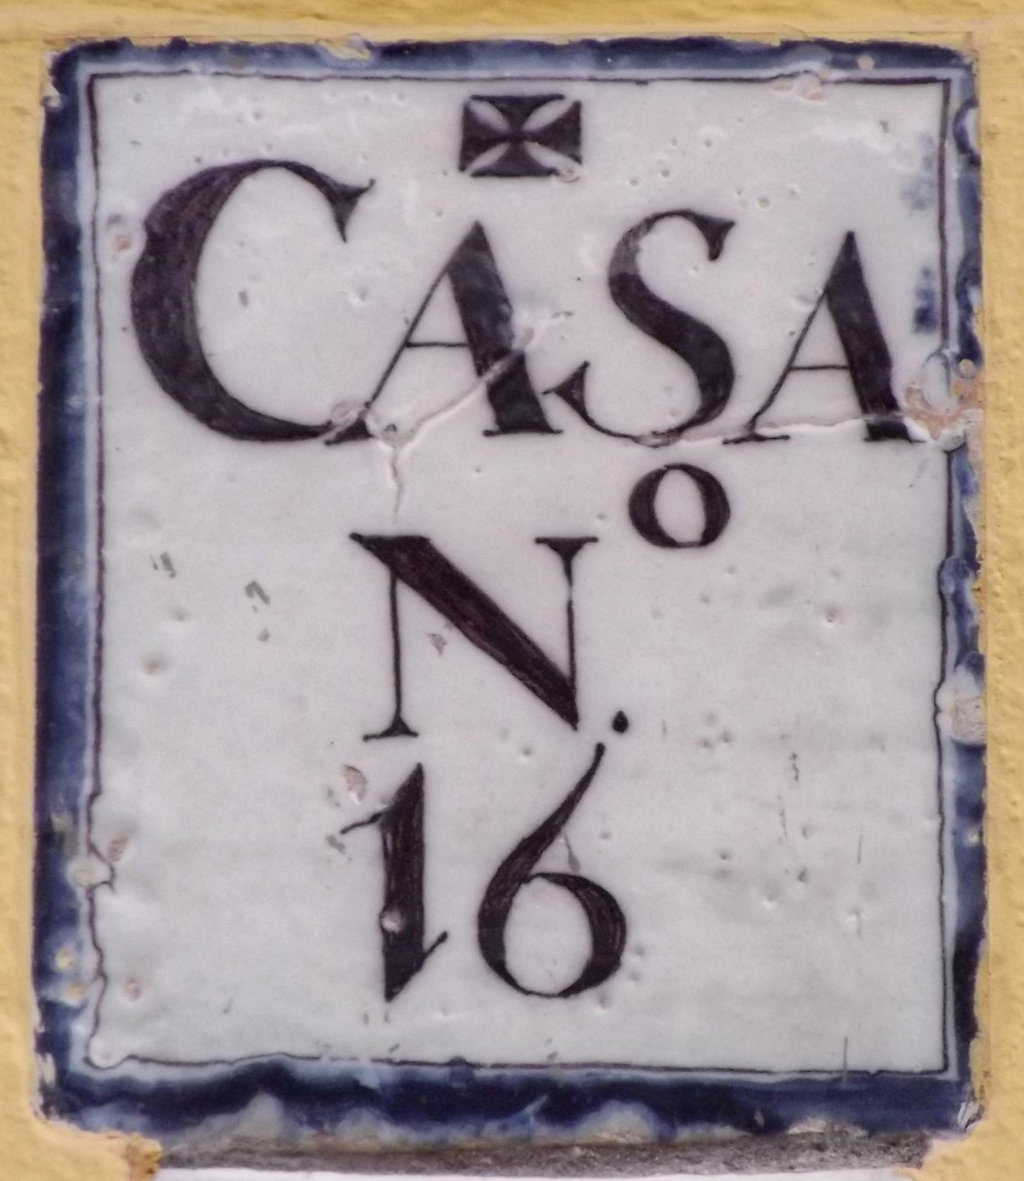 00626. Placa de Olavide. Número de casa. Casa número 3 de la calle San Fernando. Sevilla.